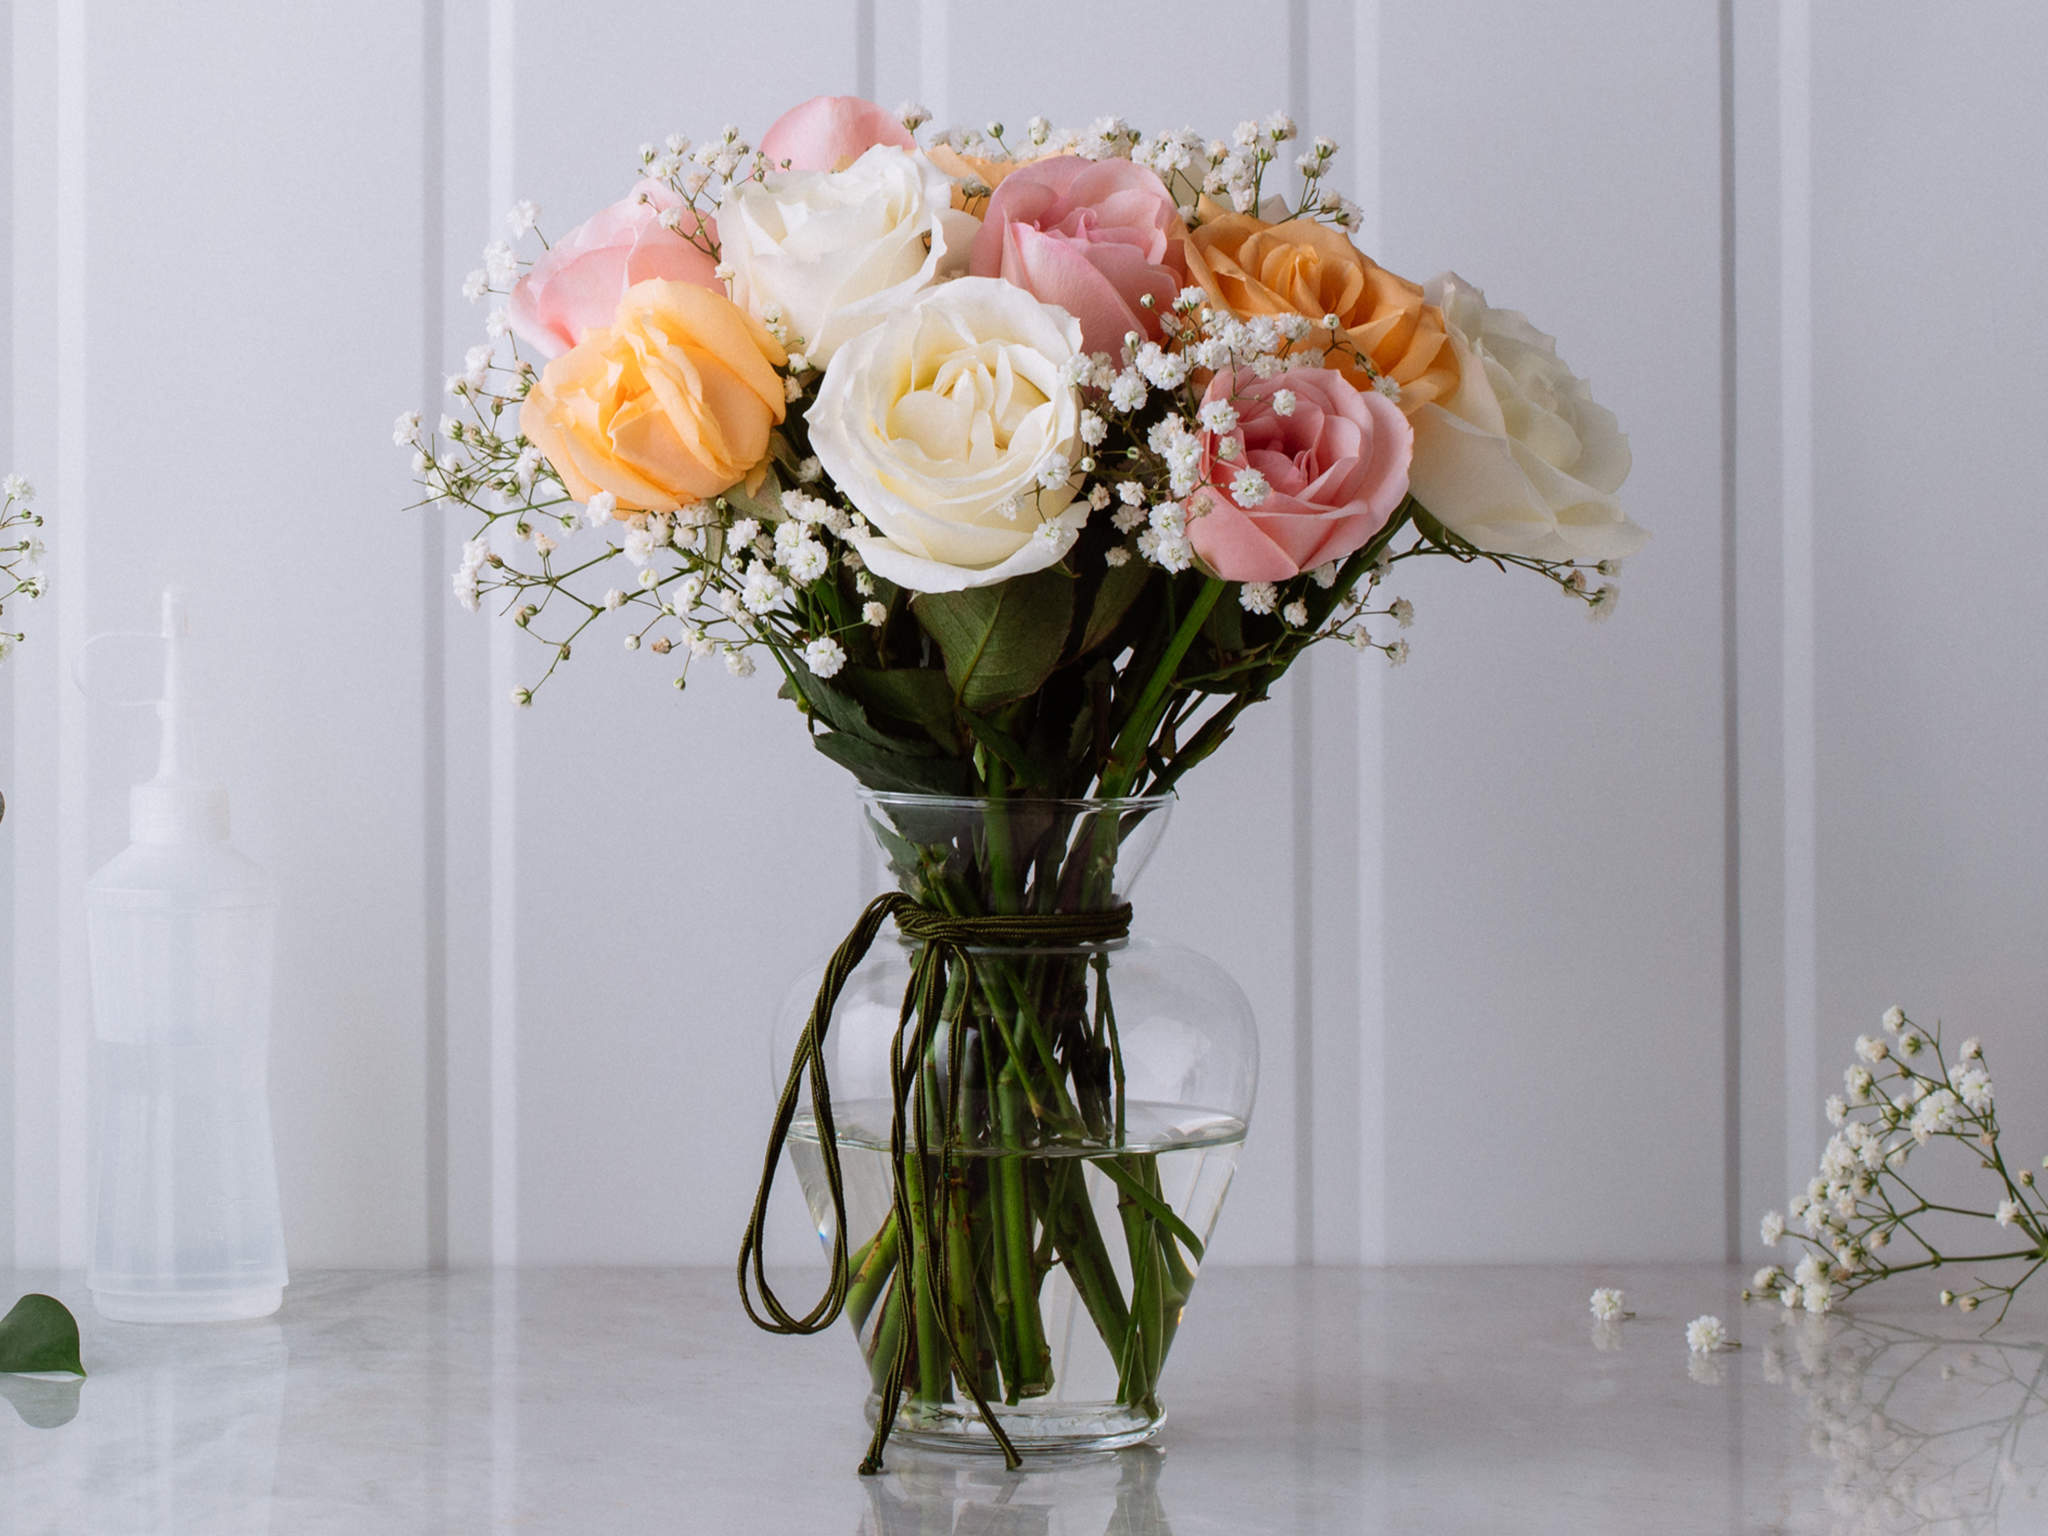 Arranjo de Rosas Brancas, Rosa e Laranja em Vaso Para Entrega